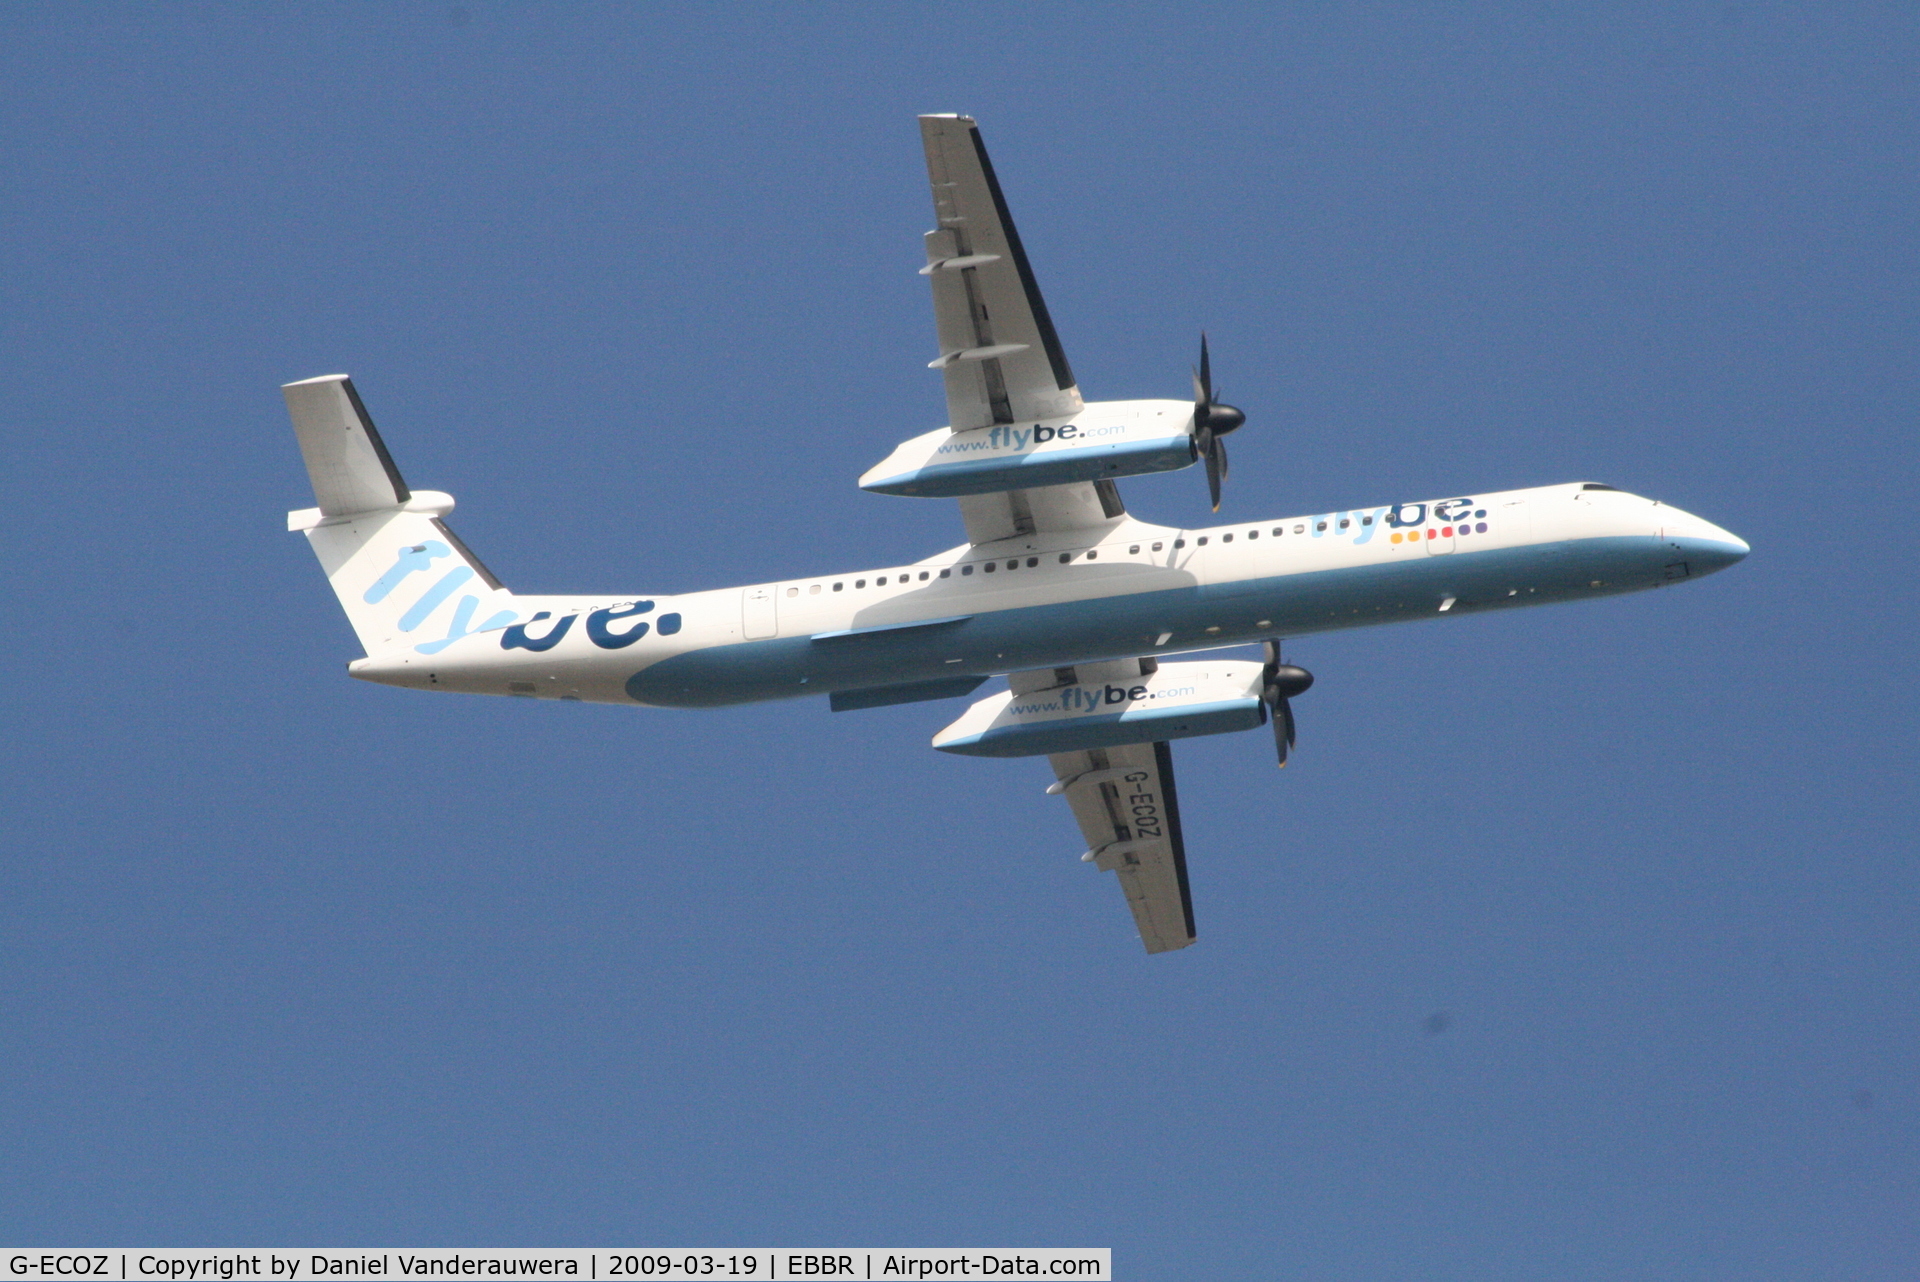 G-ECOZ, 2001 De Havilland Canada DHC-8-402Q Dash 8 C/N 4034, Flight BE7182 is taking off from RWY 07R